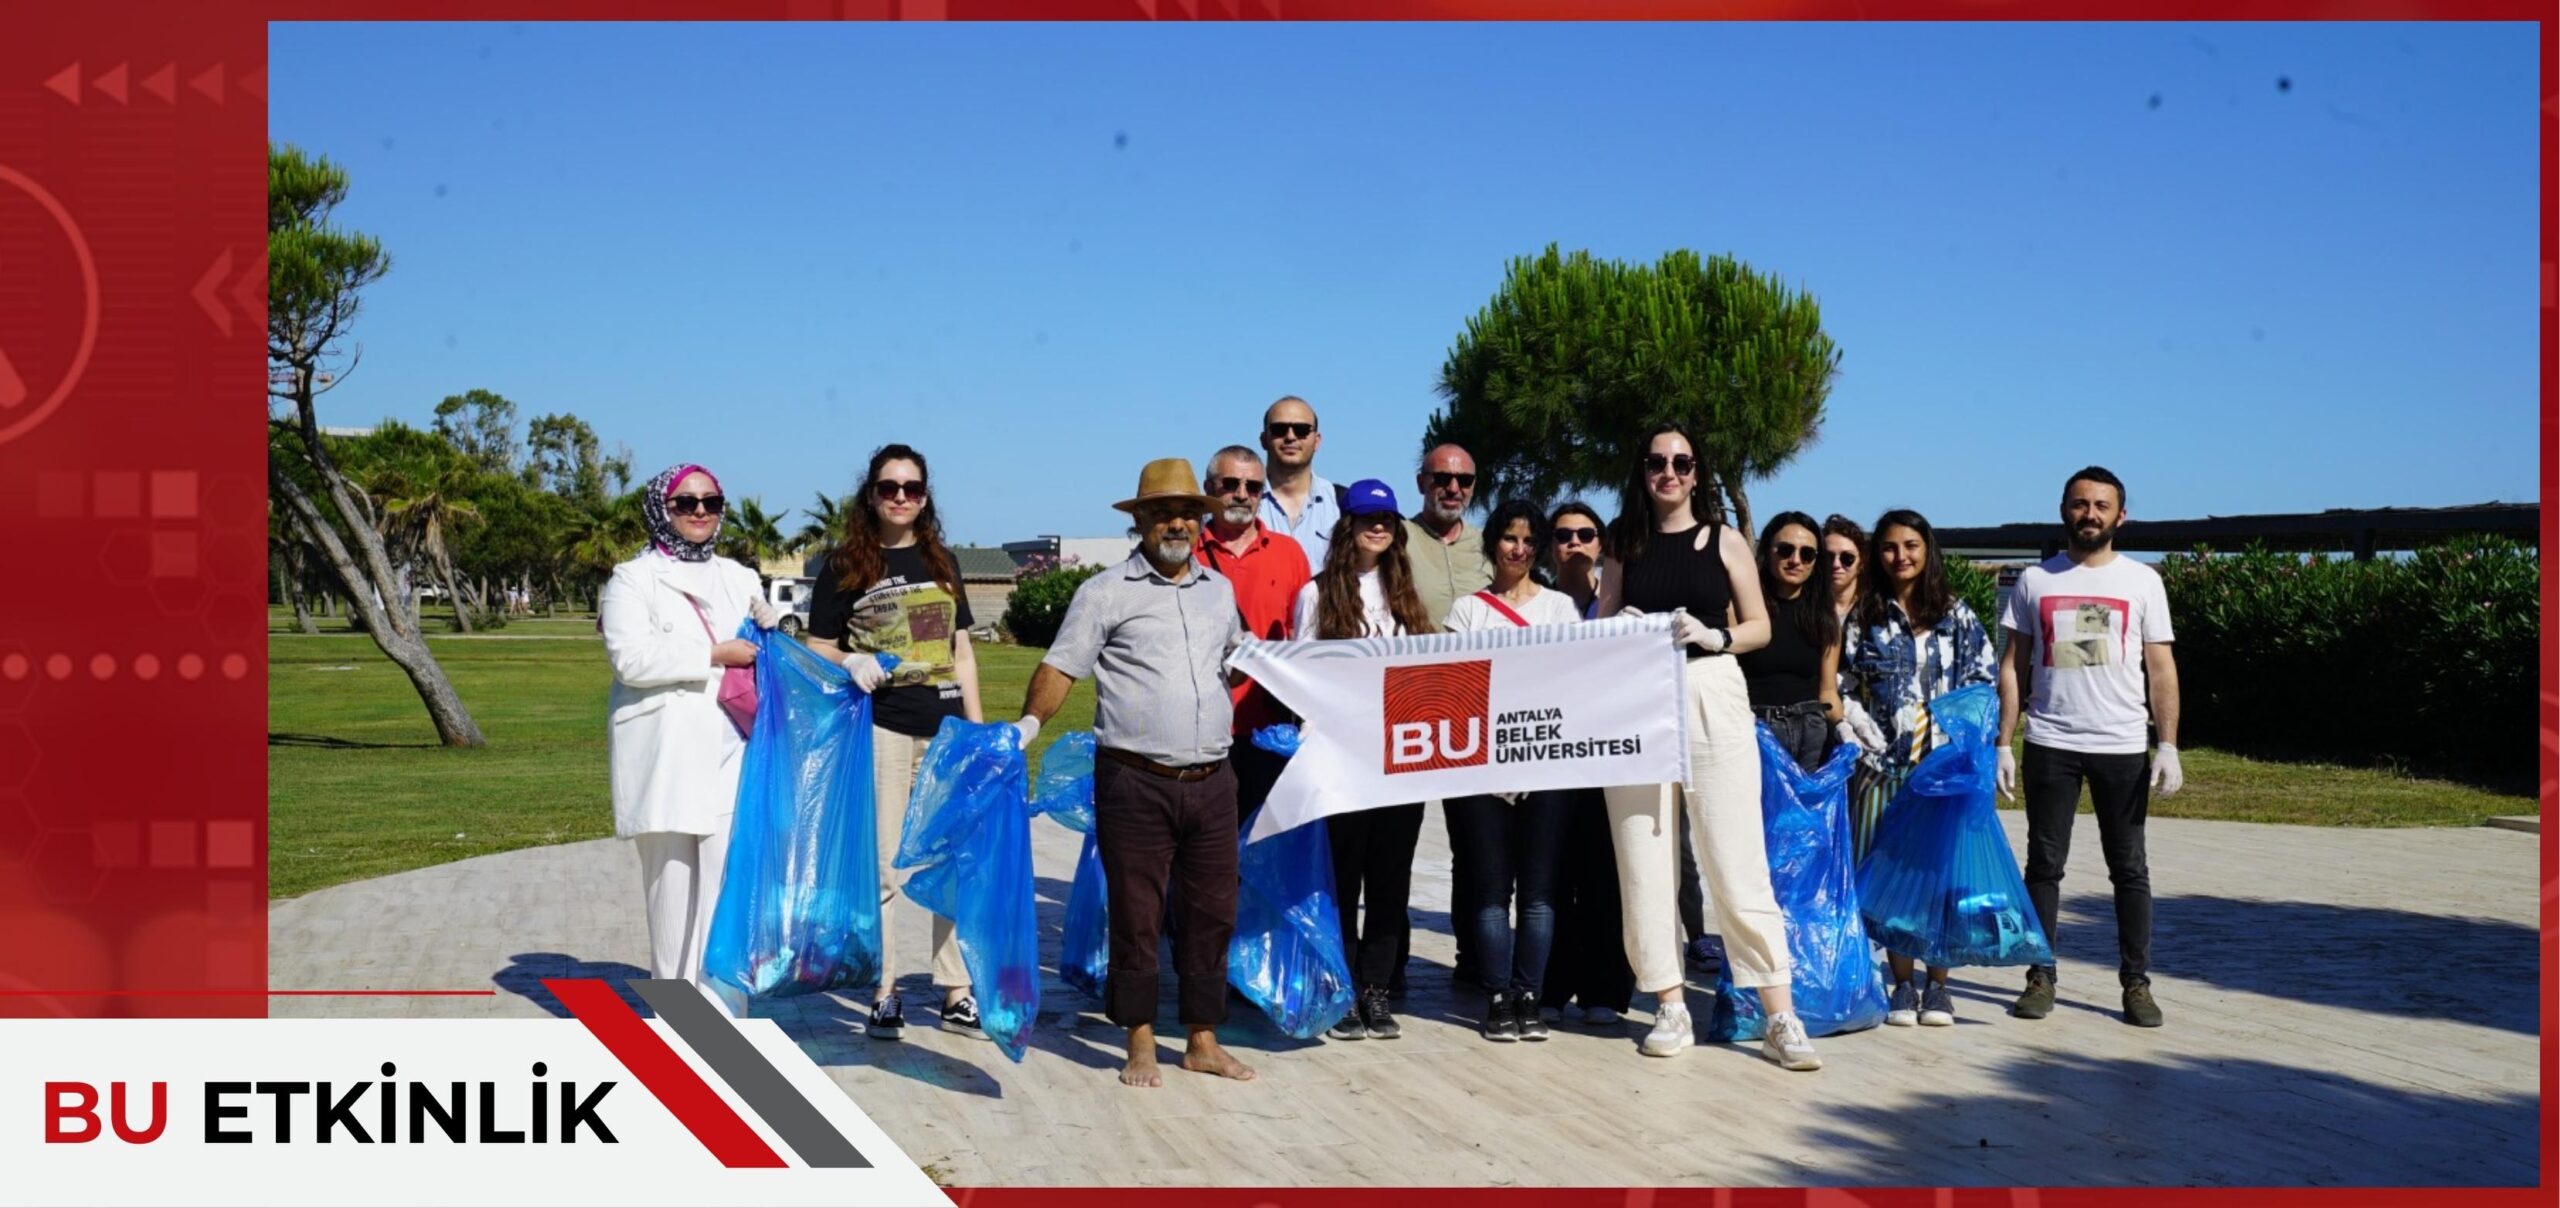 antalyabelek universitesi find and study 2 scaled - Université d'Antalya Belek